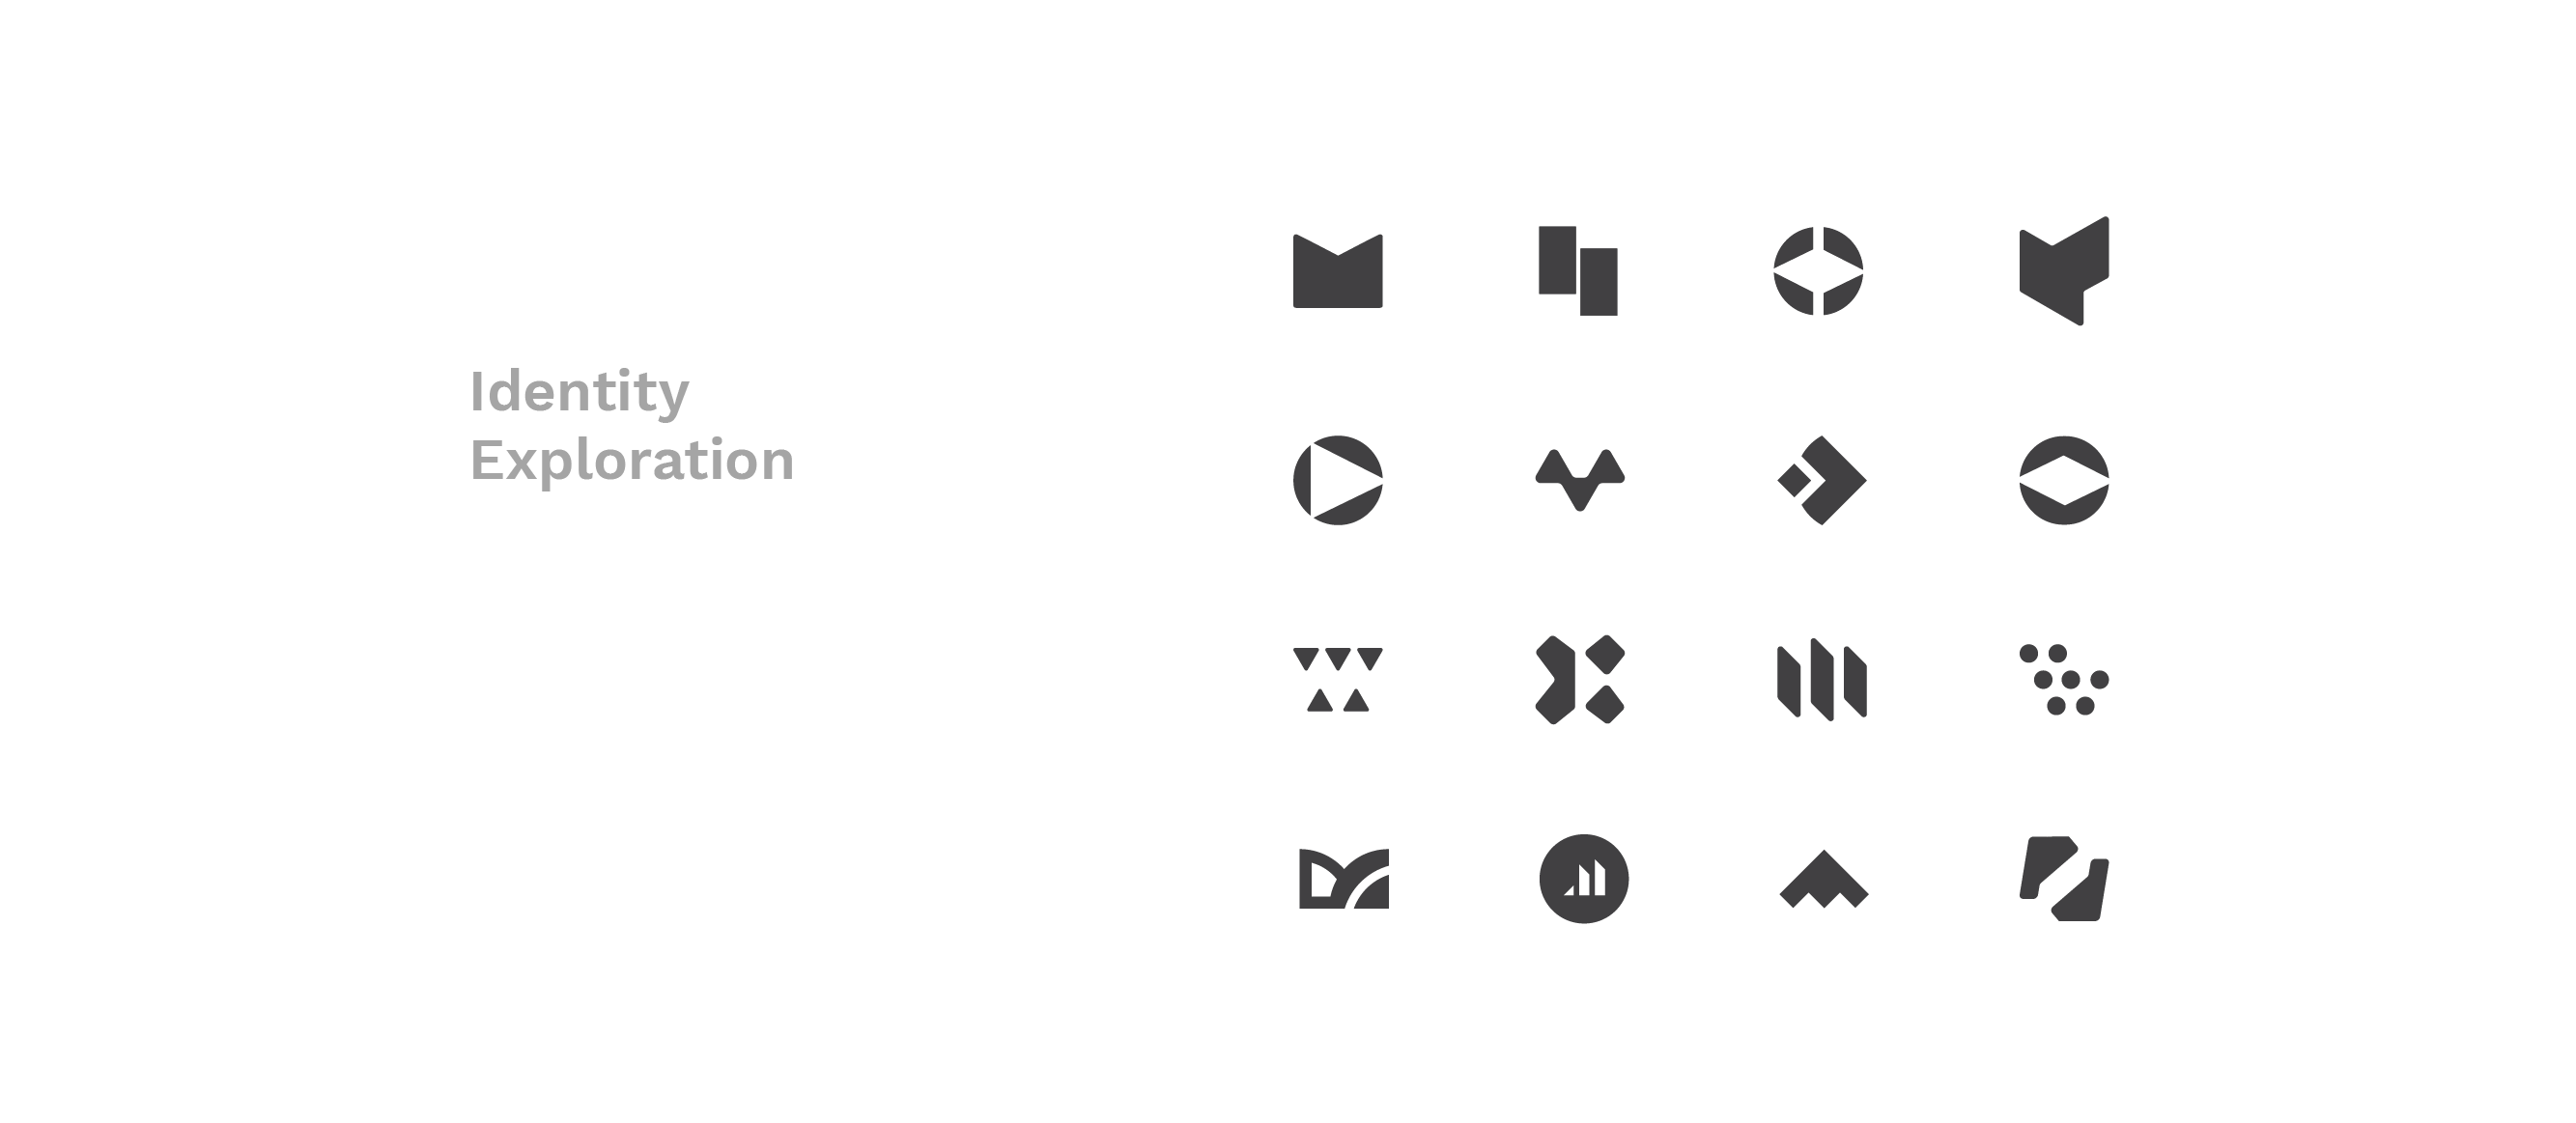 marketron-logo-exploration-05